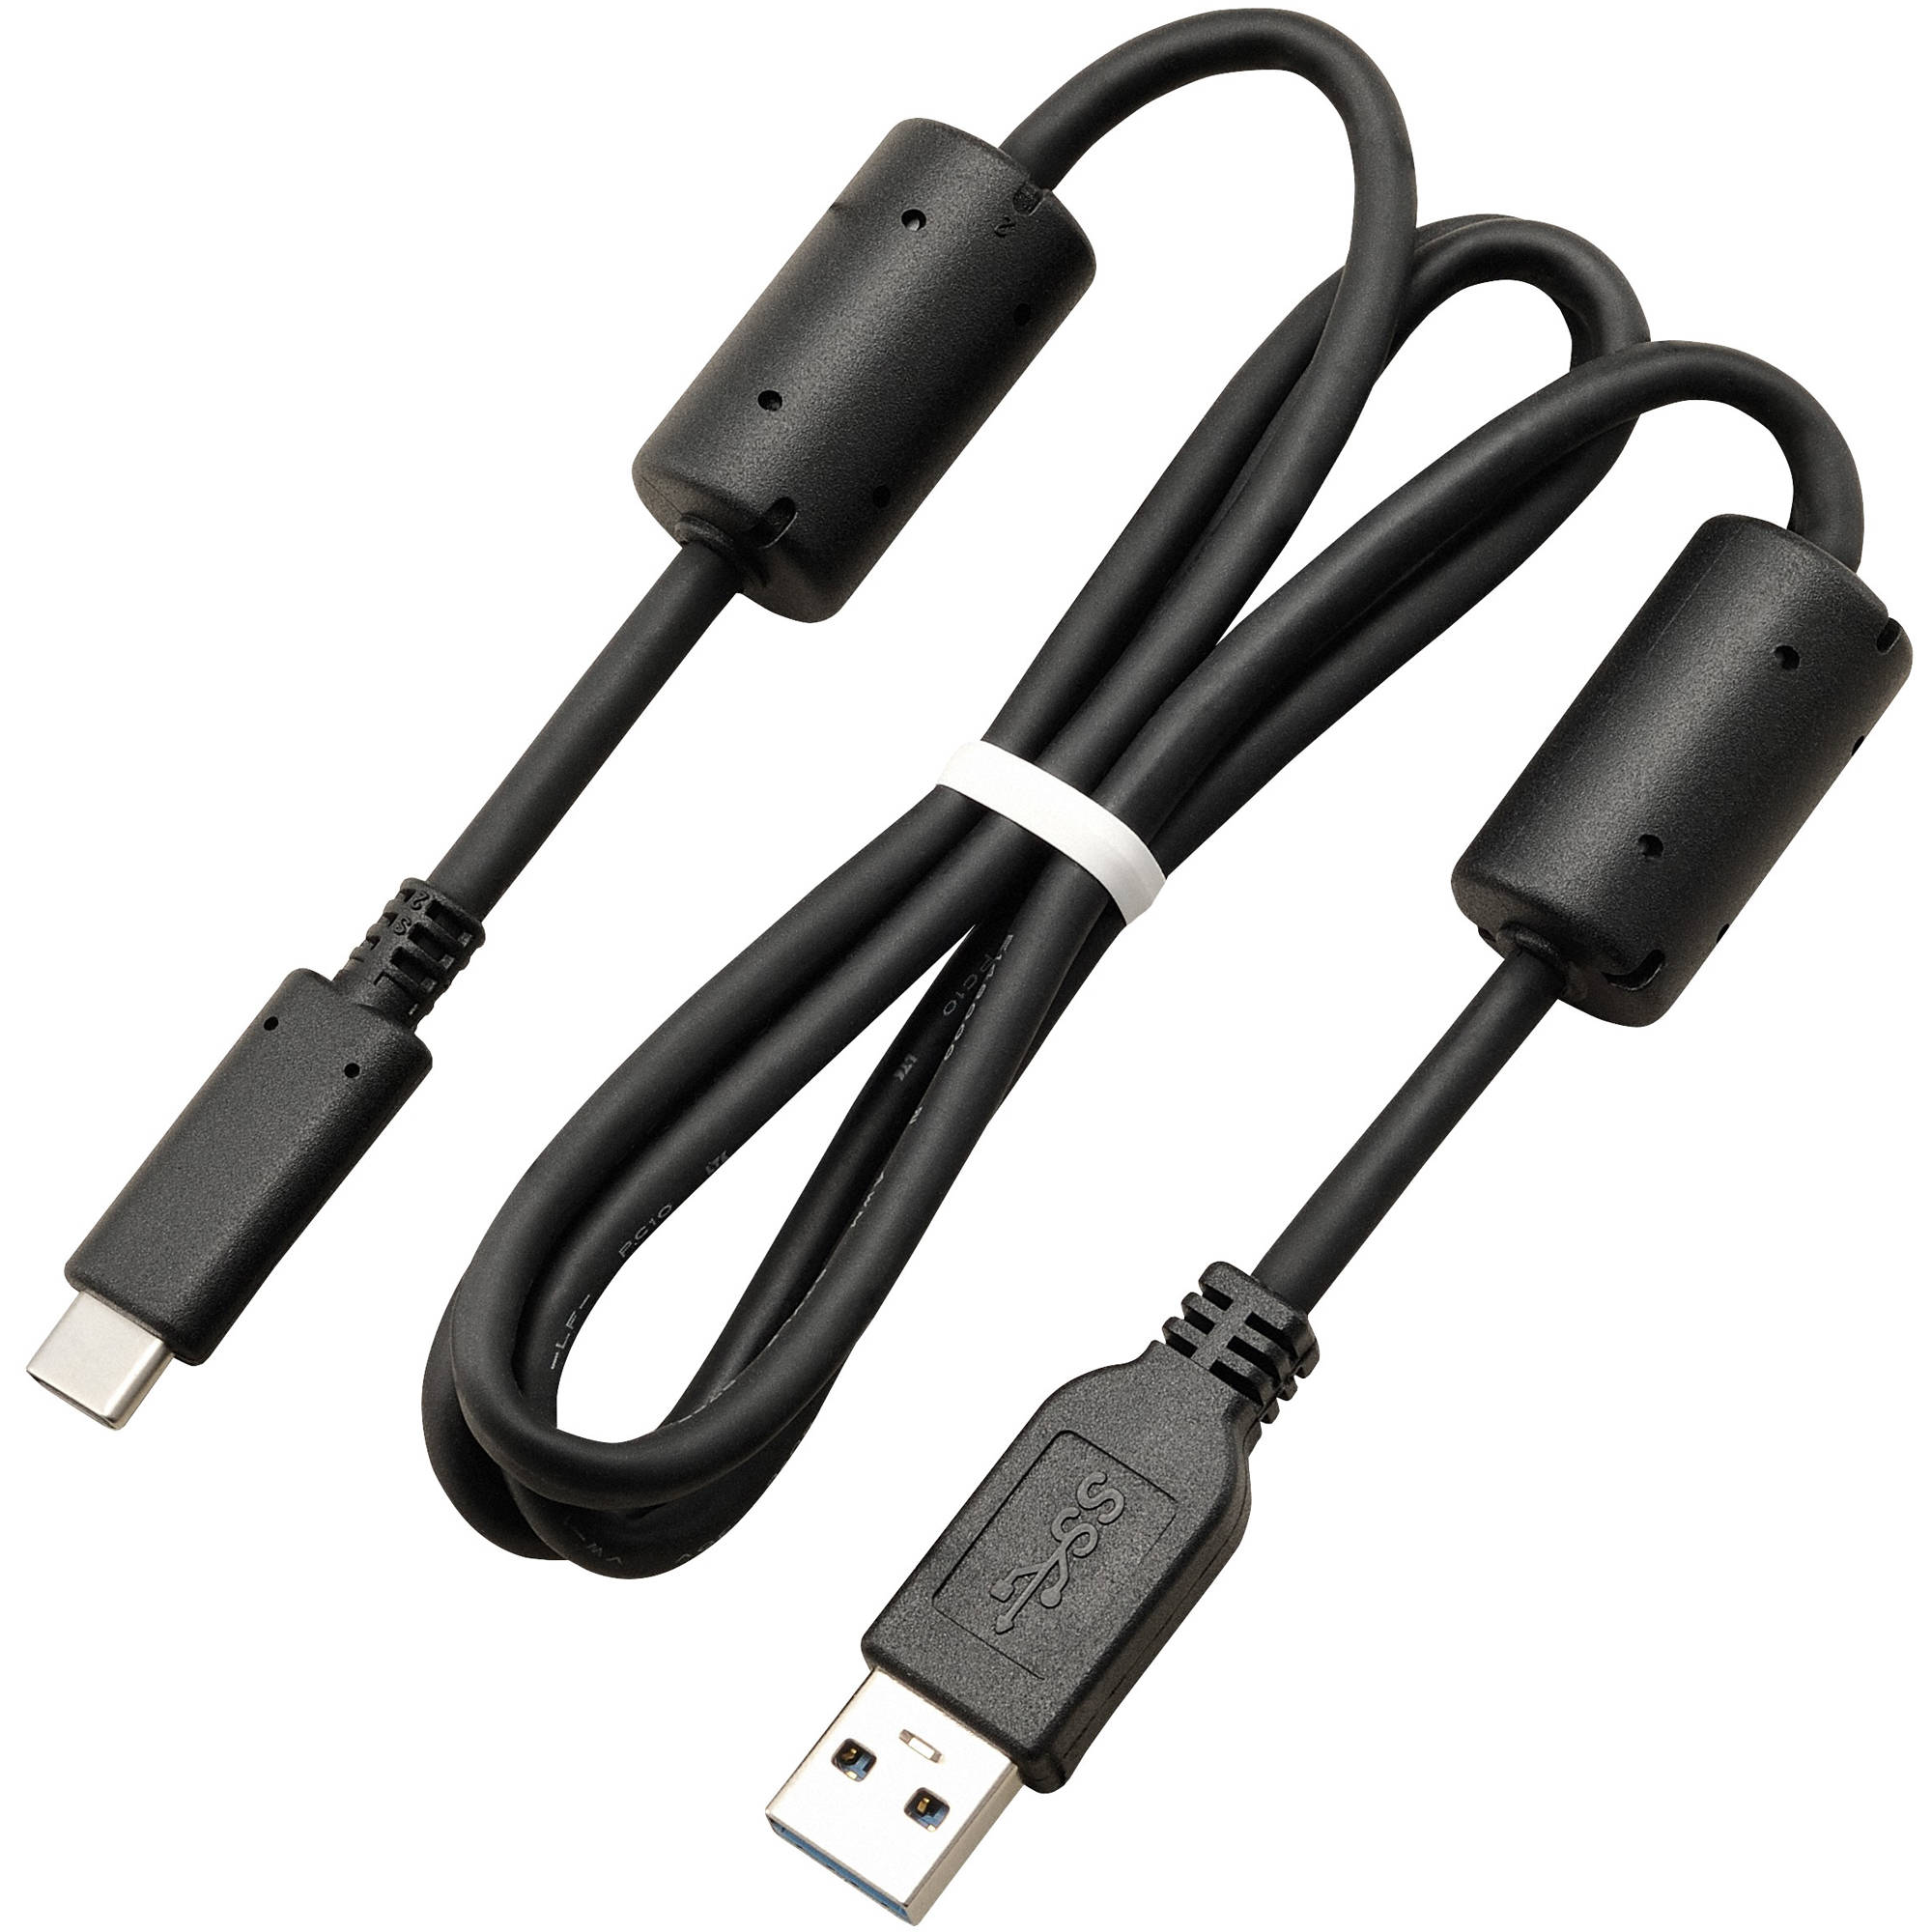 CB-USB11 USB Cable for E-M1 Mark II